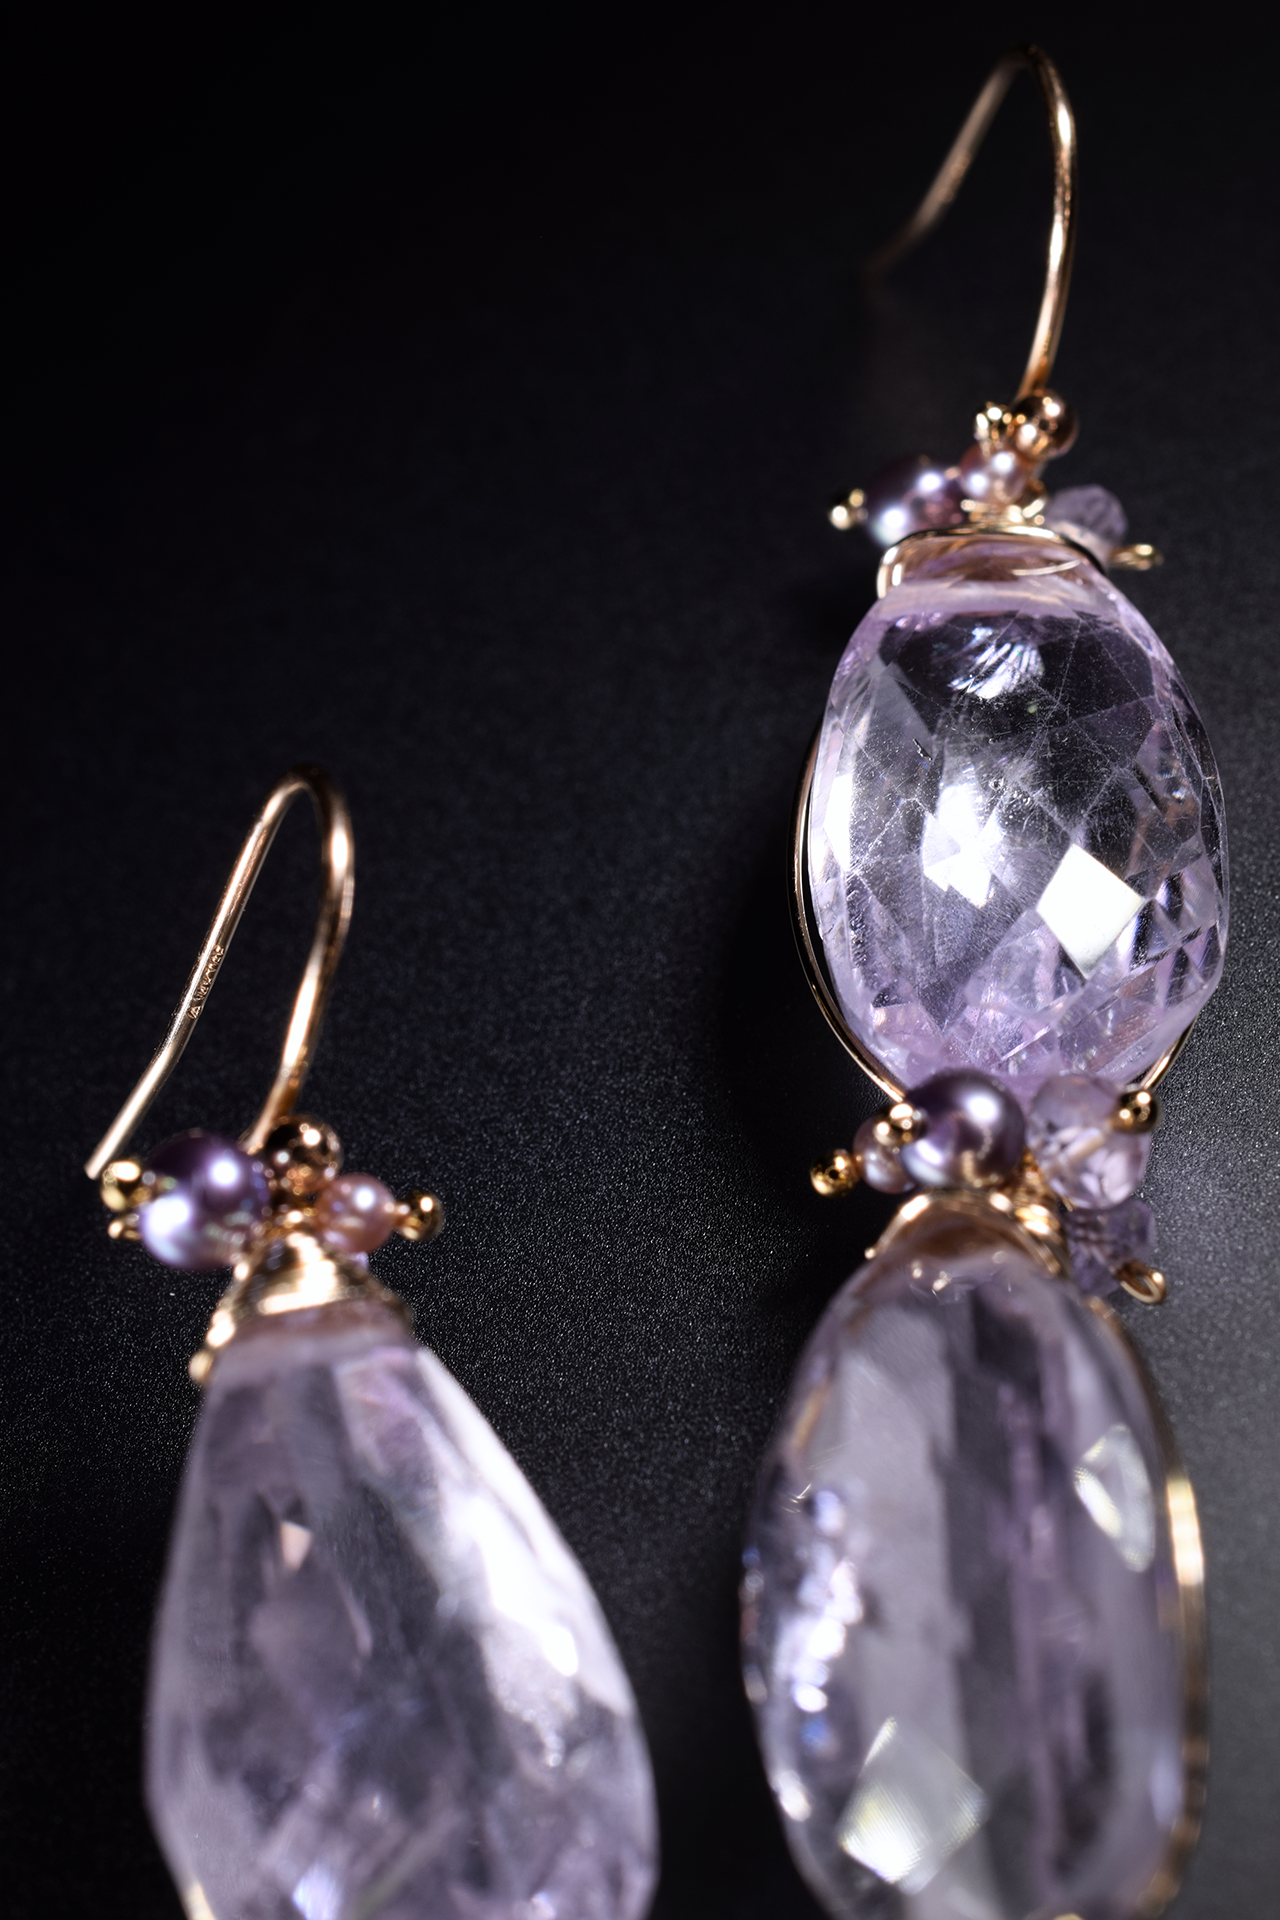 Details of pink amethyst and pearl drop earrings